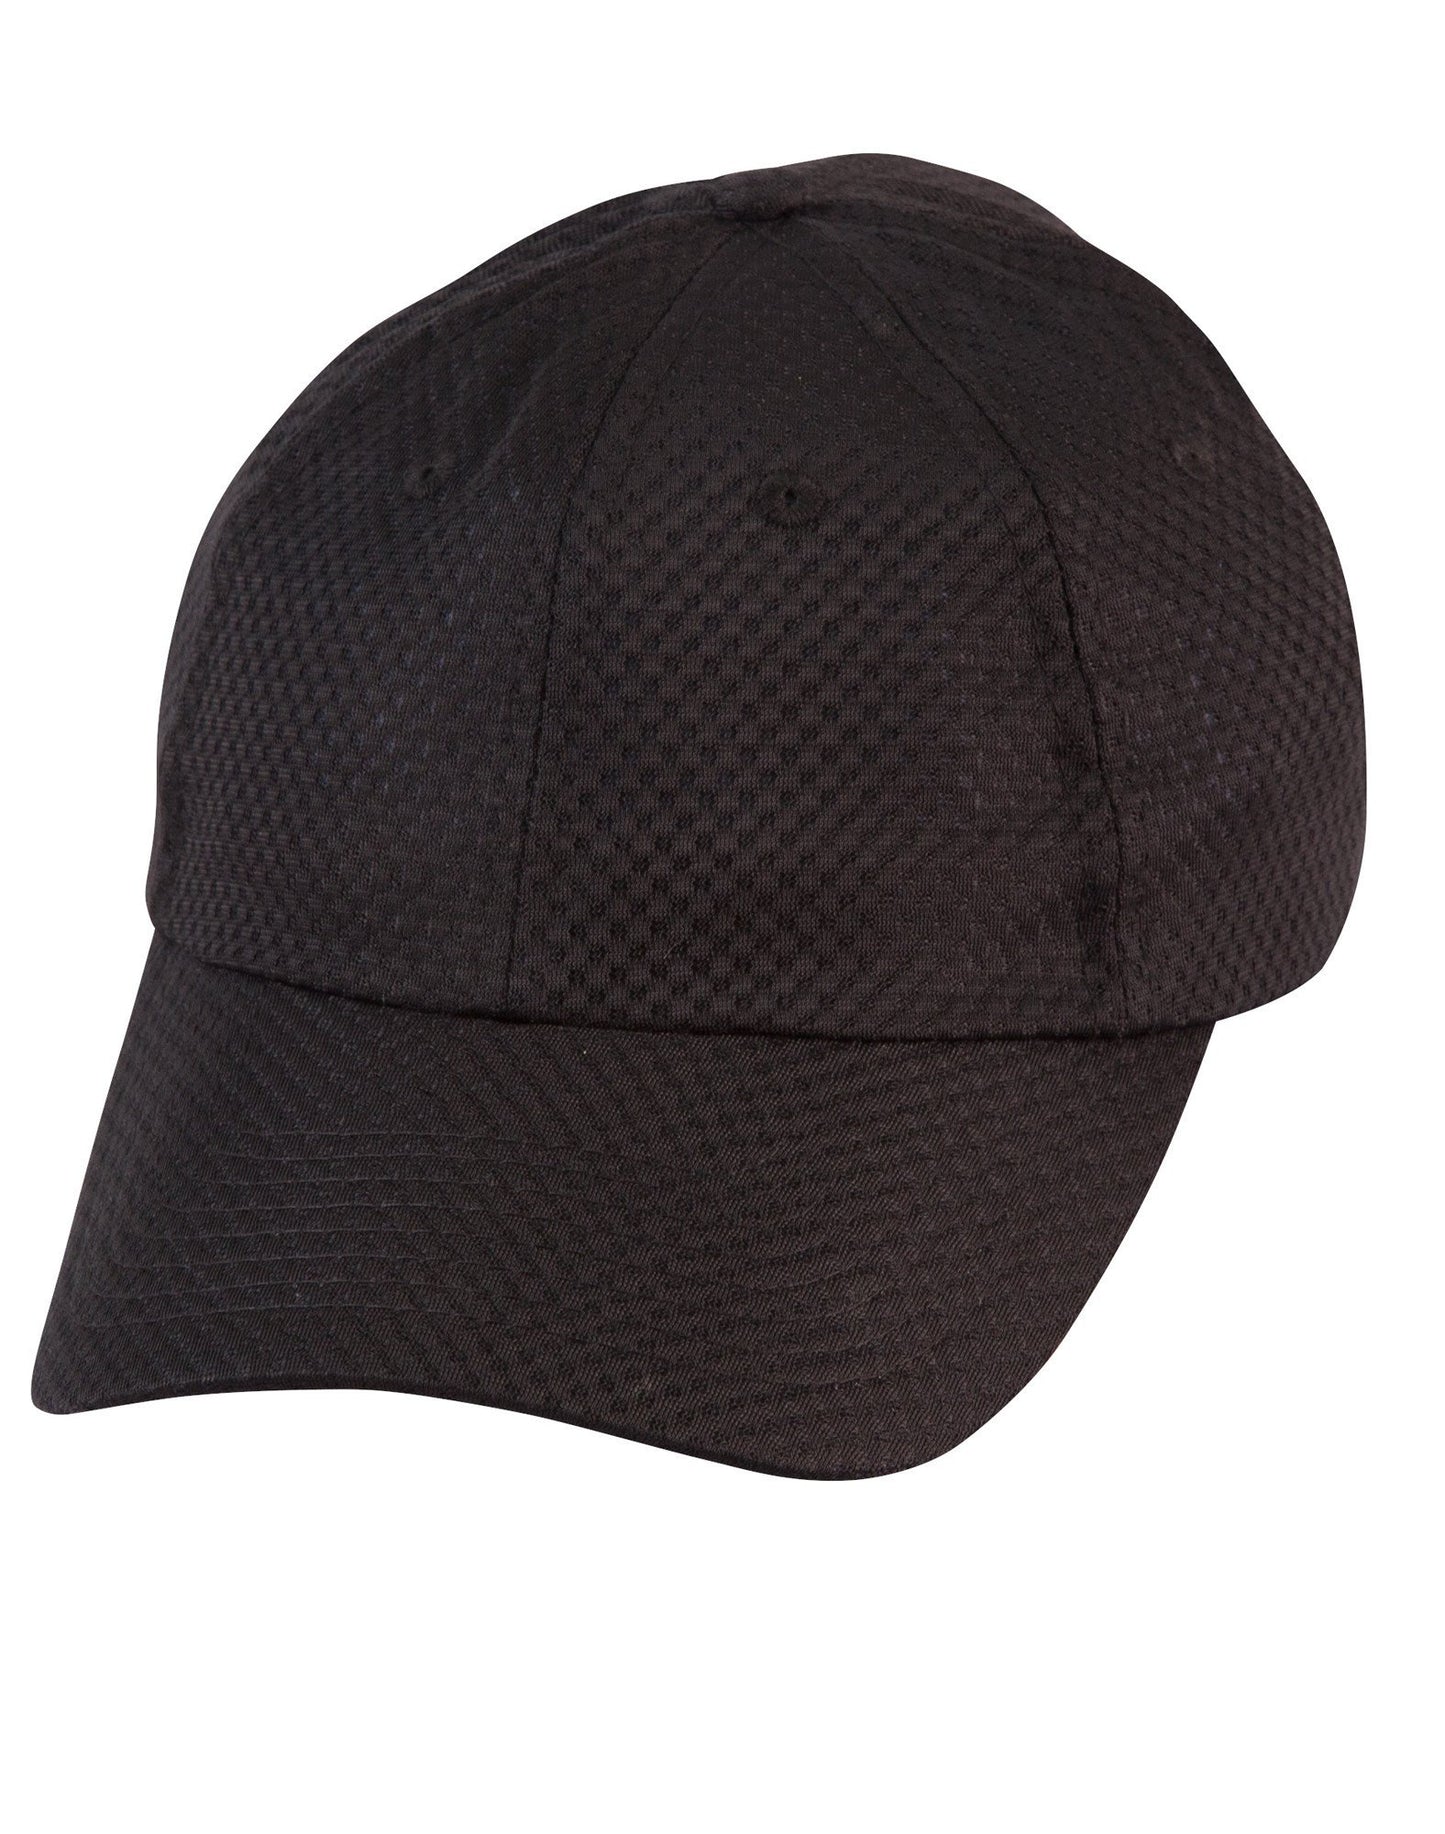 Winning Spirit-Winning Spirit Athletic Mesh Cap-Black-Uniform Wholesalers - 1